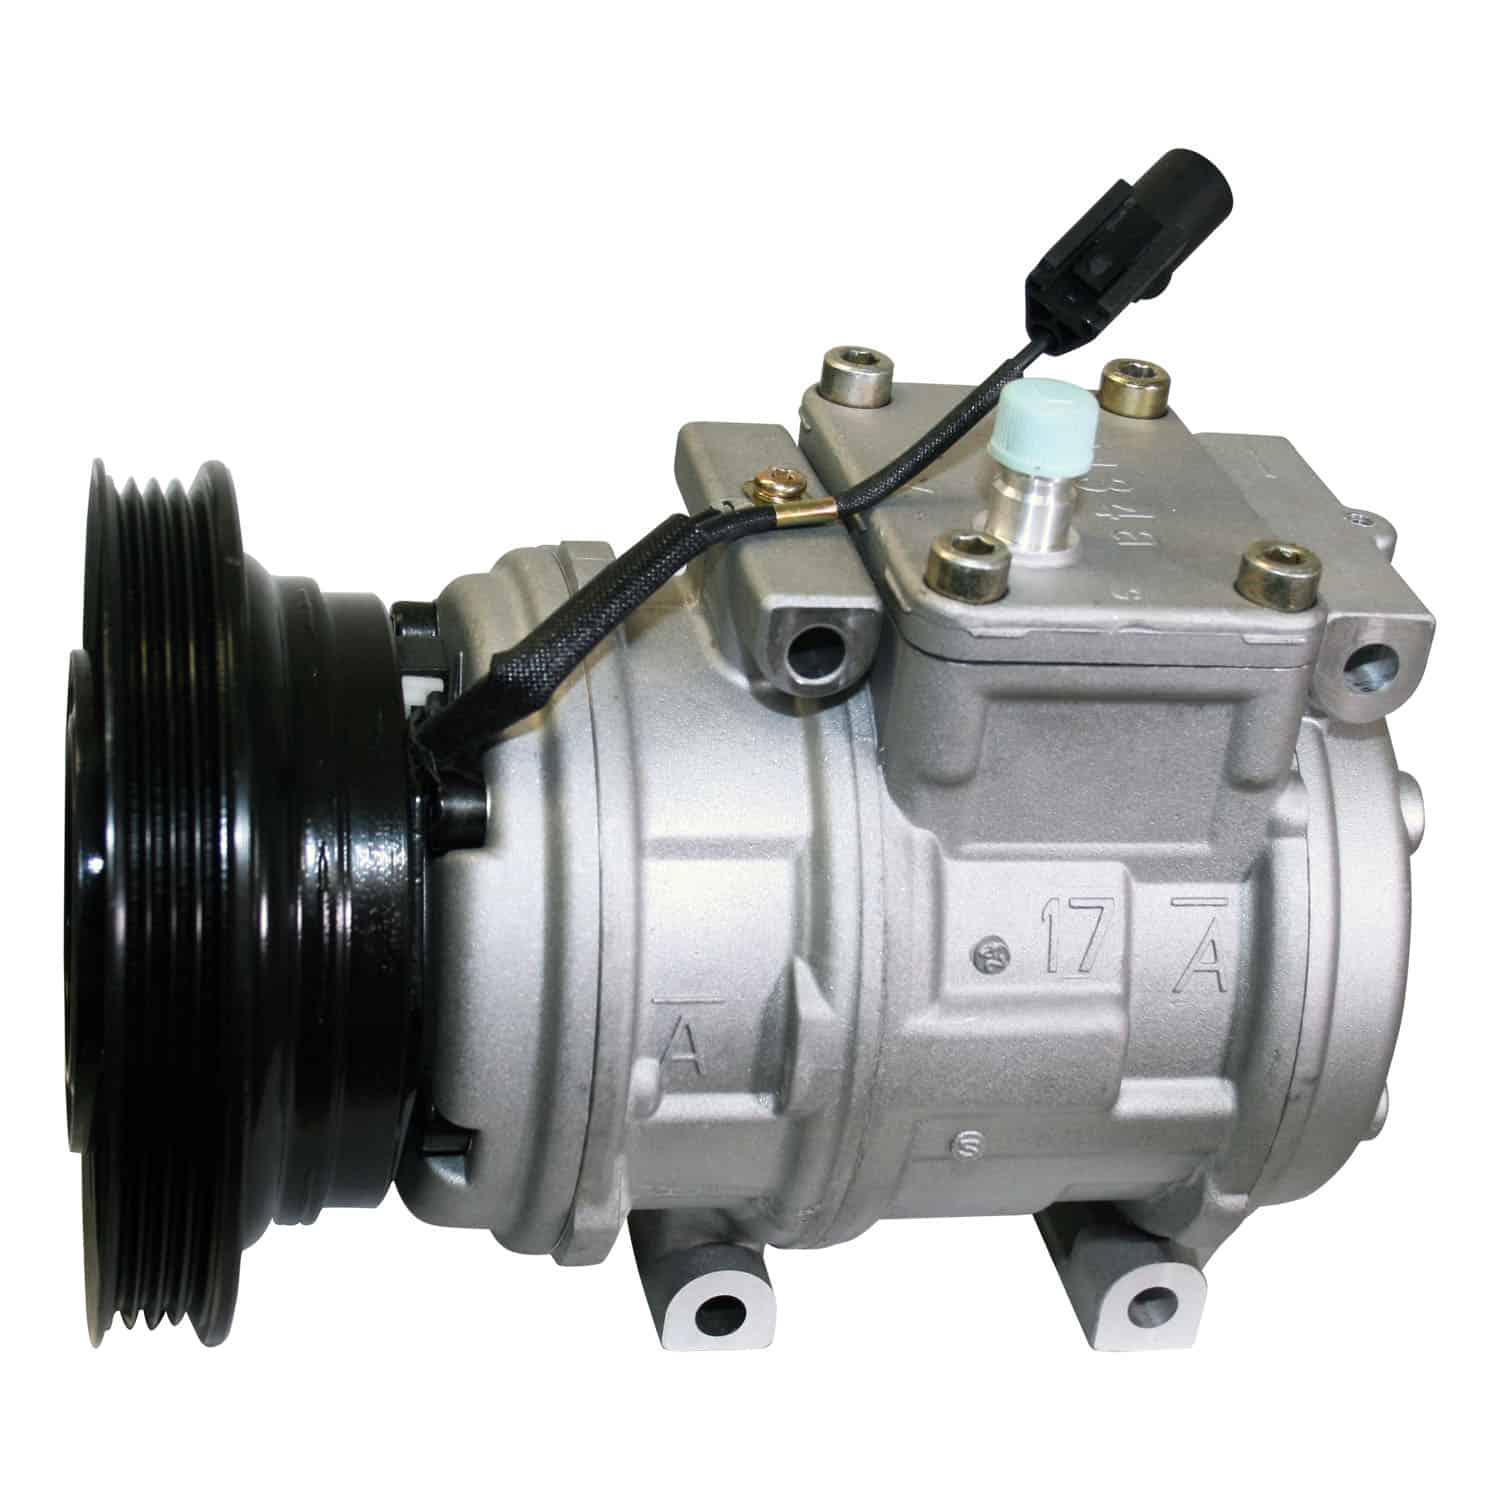 TCW Compressor 31270.402NEW New Product Image field_60b6a13a6e67c